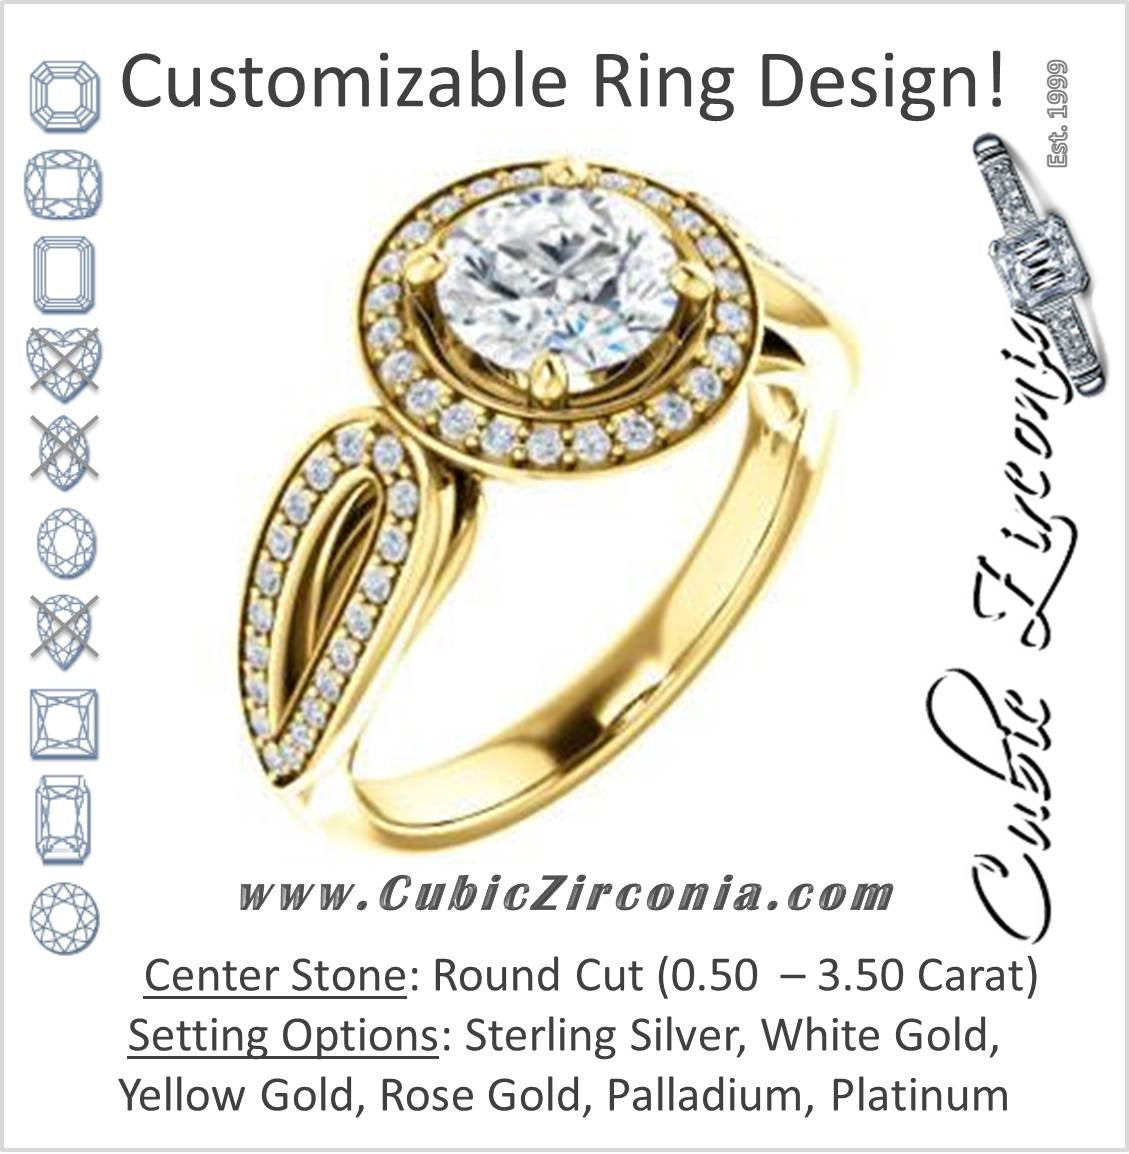 Cubic Zirconia Engagement Ring- The Jordyn Elitza (Customizable Halo-Style Round Cut with Twisting Pavé Split-Shank)